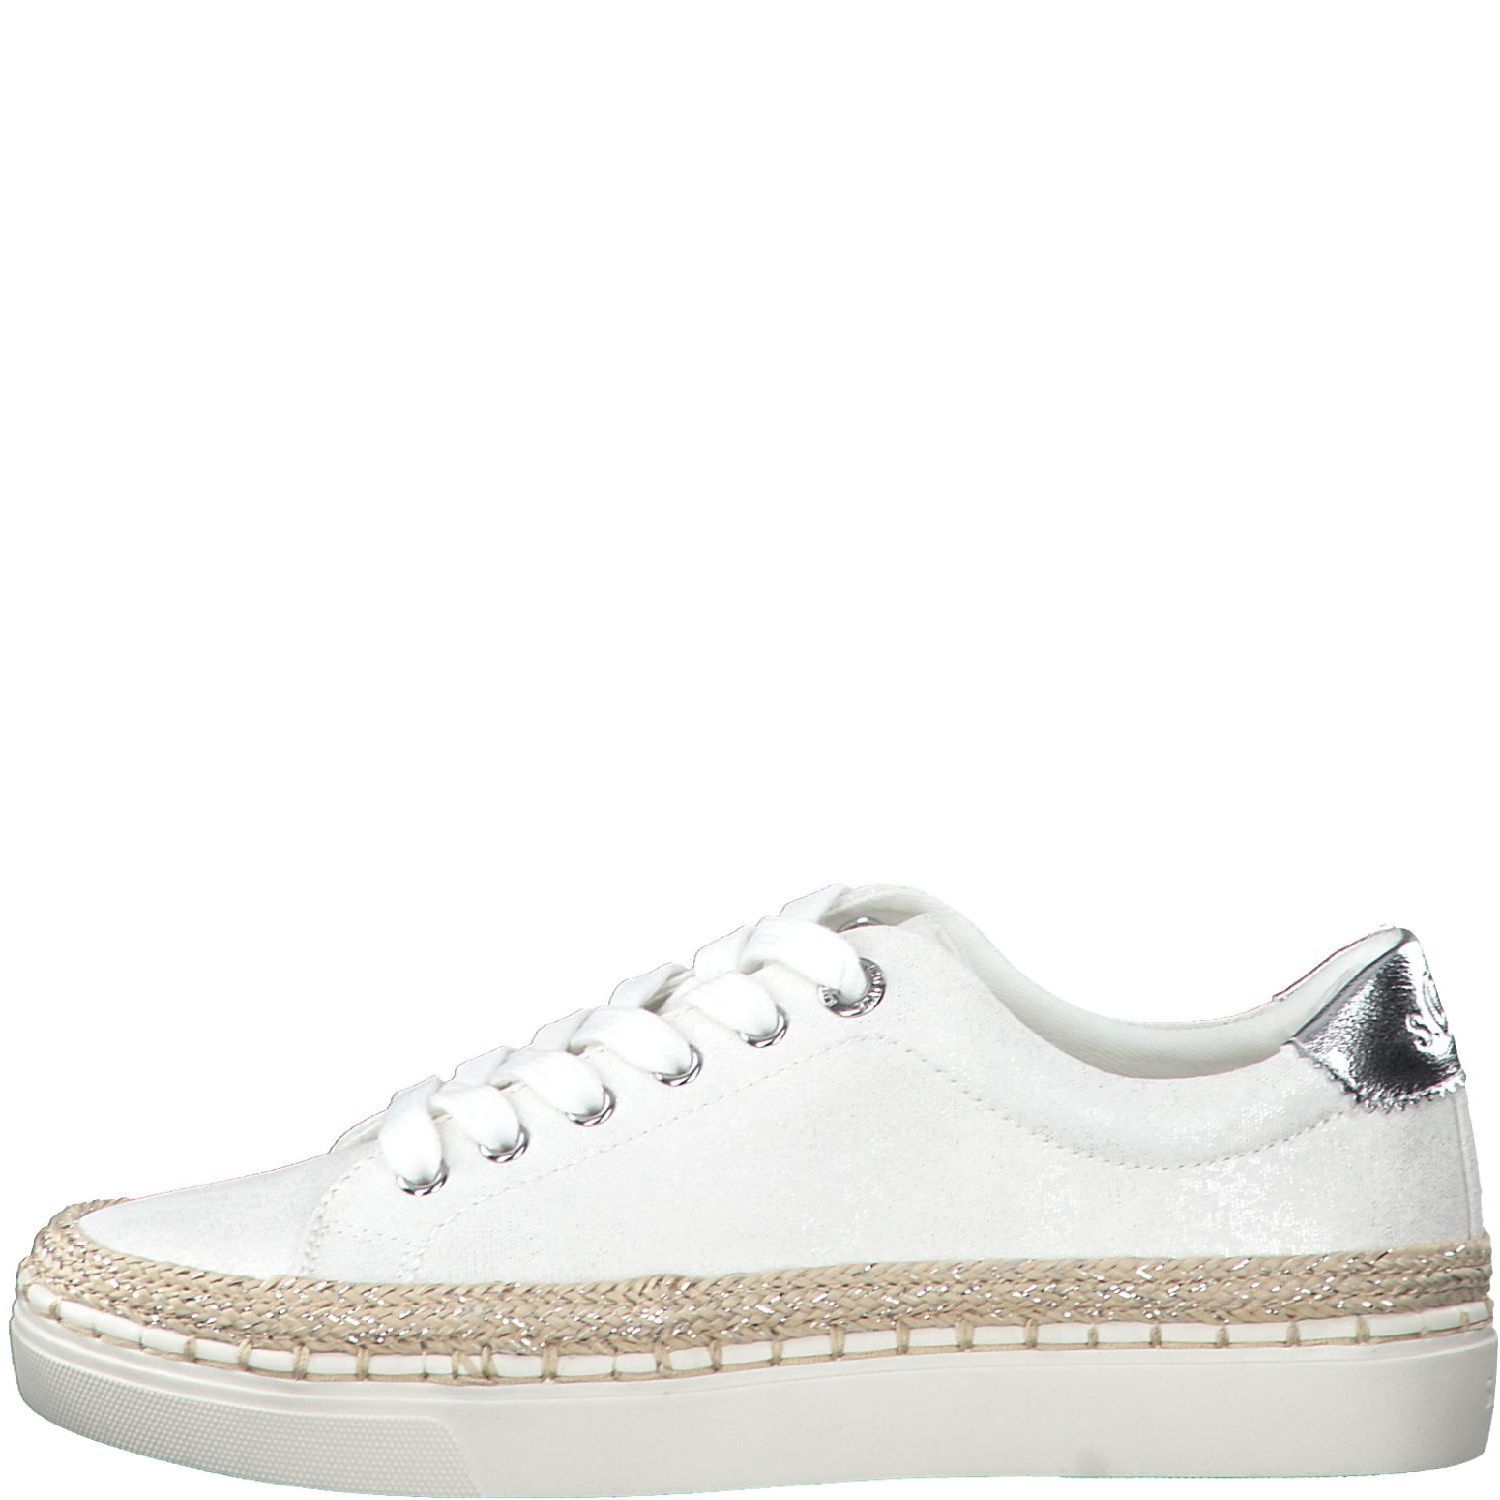 Oliver Sneaker 23679-100 White Textile